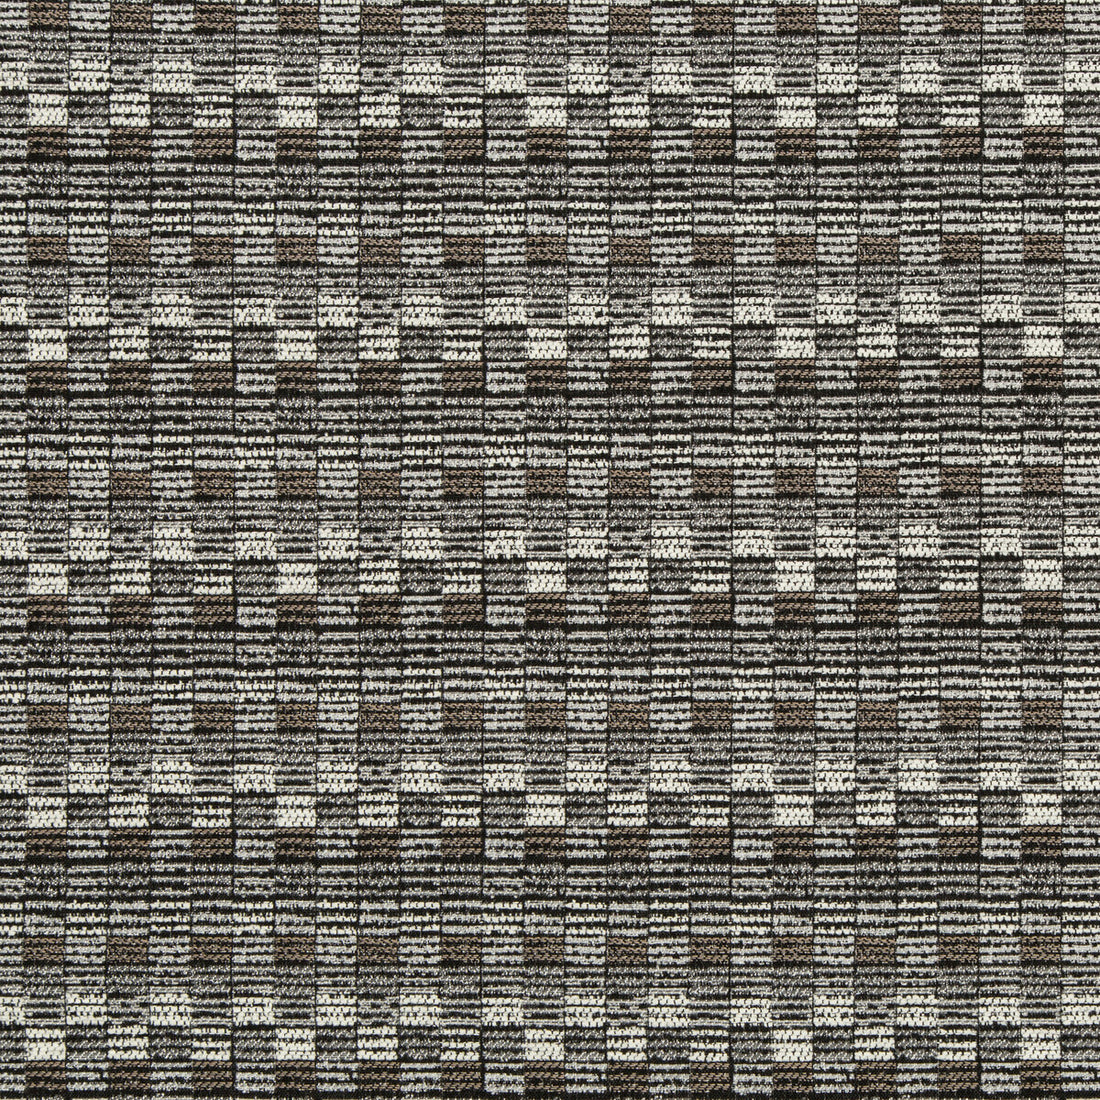 Lj Grw fabric - pattern 2019145.18.0 - by Lee Jofa Modern in the Kw Terra Firma III Indoor Outdoor collection